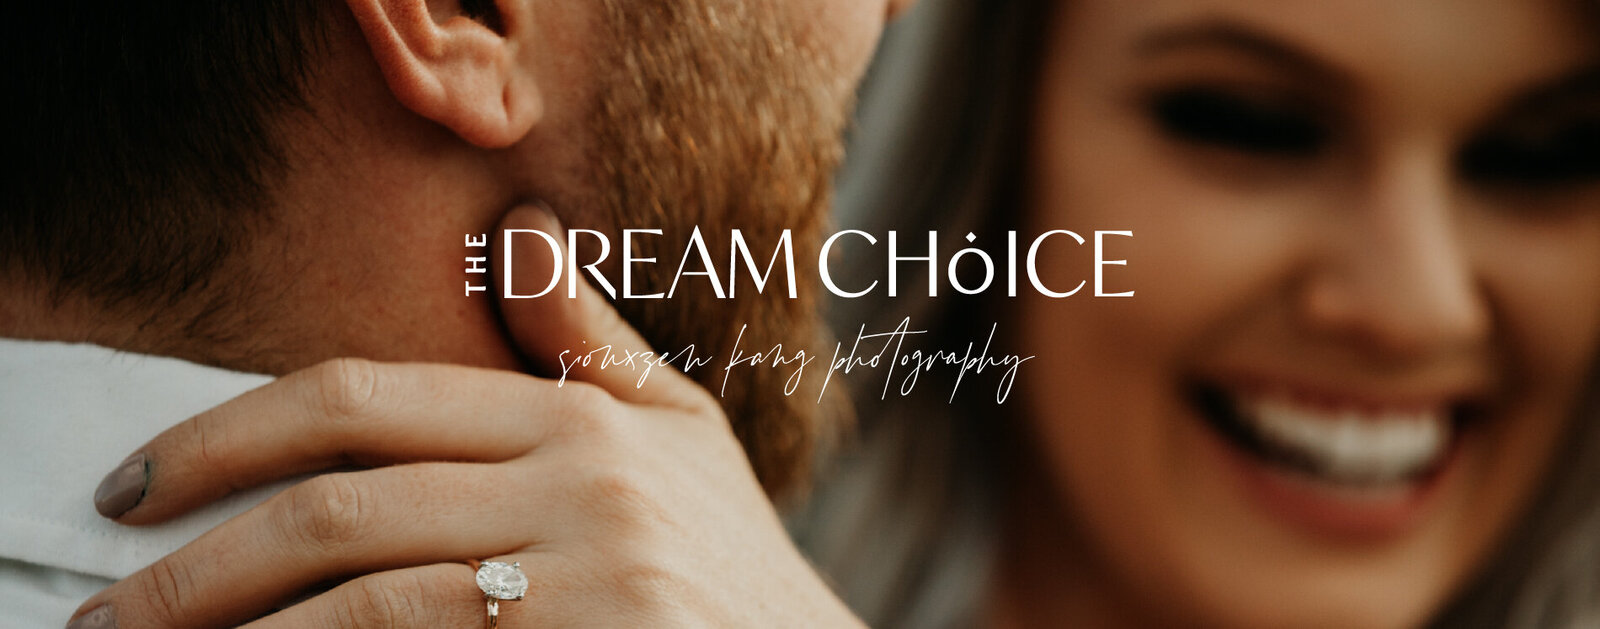 dream choice example-100